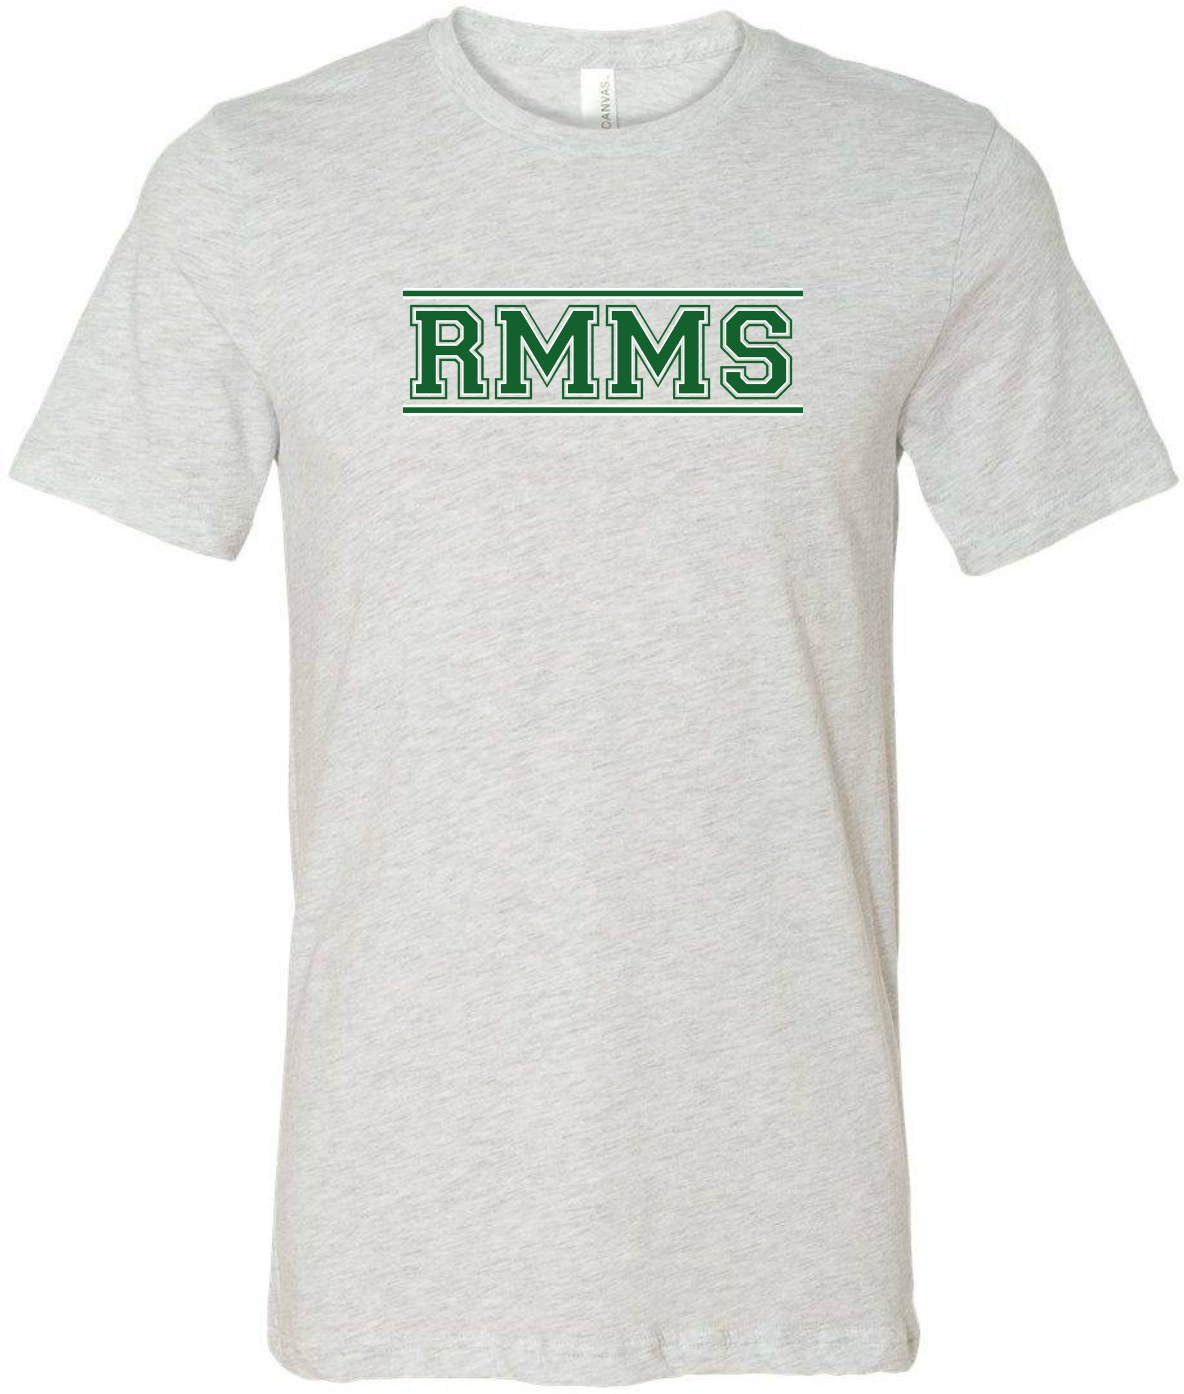 RMMS_green-white_C